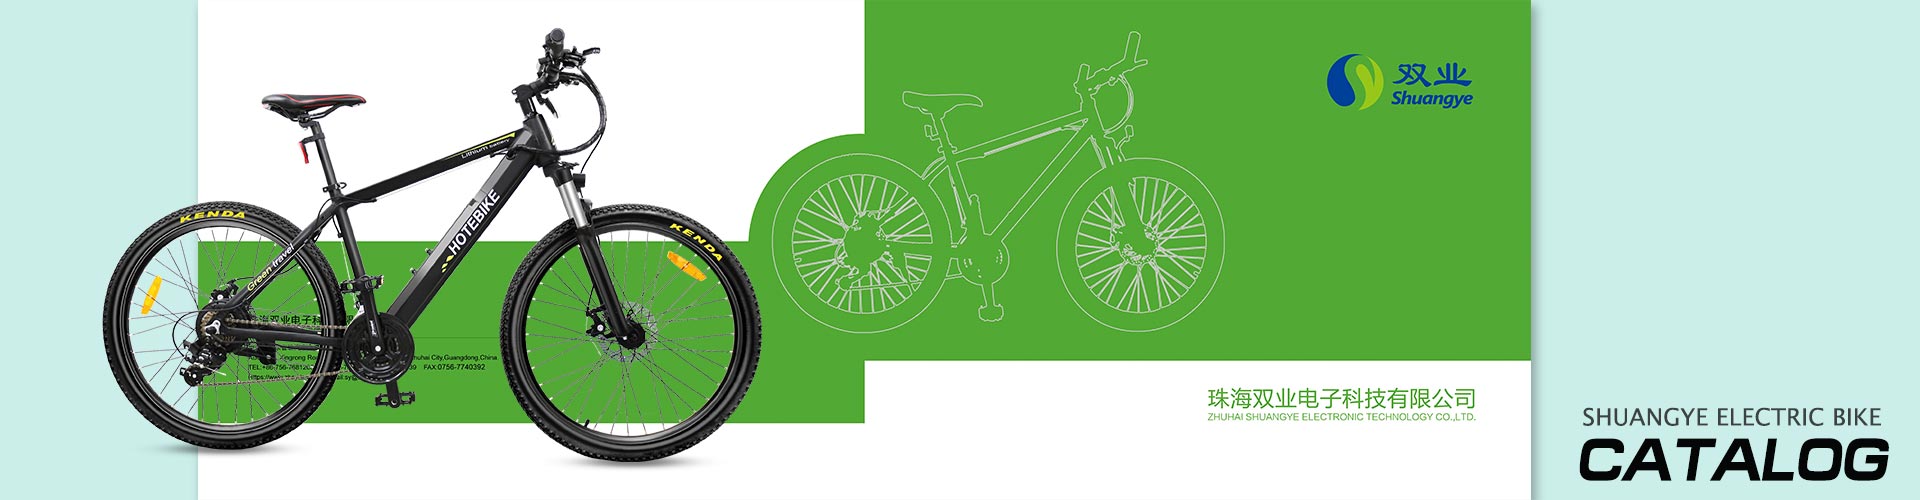 Katalog sepeda listrik Shuangye terbaru